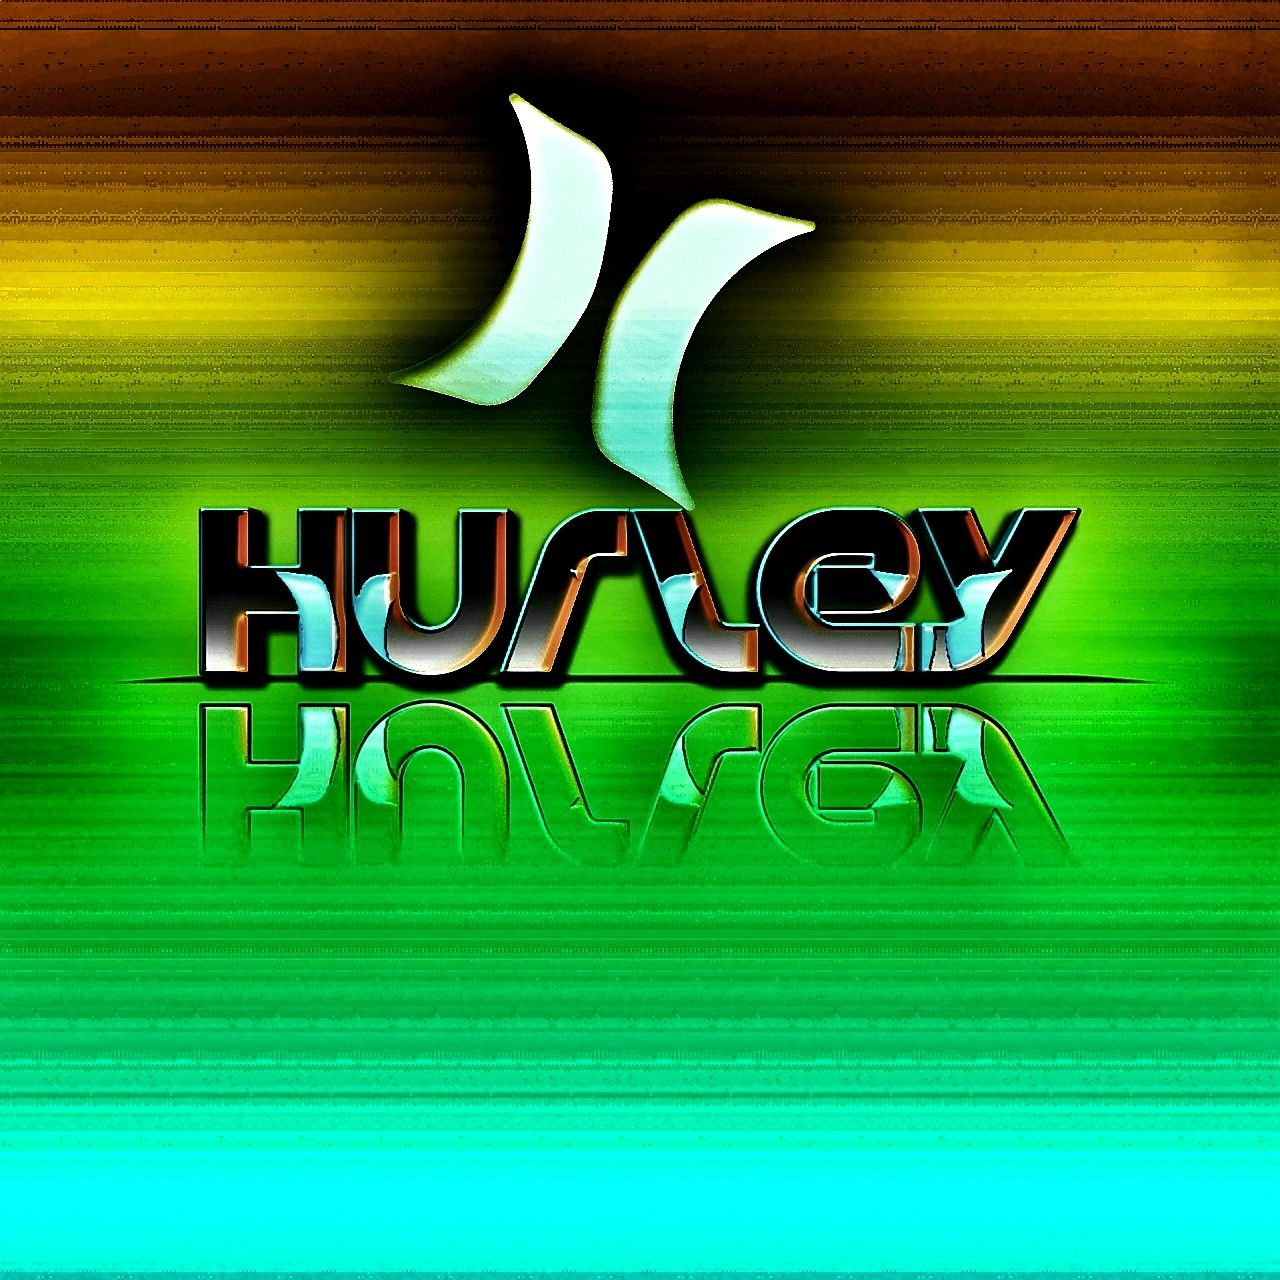 Hurley wallpaper. Quiksilver wallpaper, Logo wallpaper hd, Surfing wallpaper